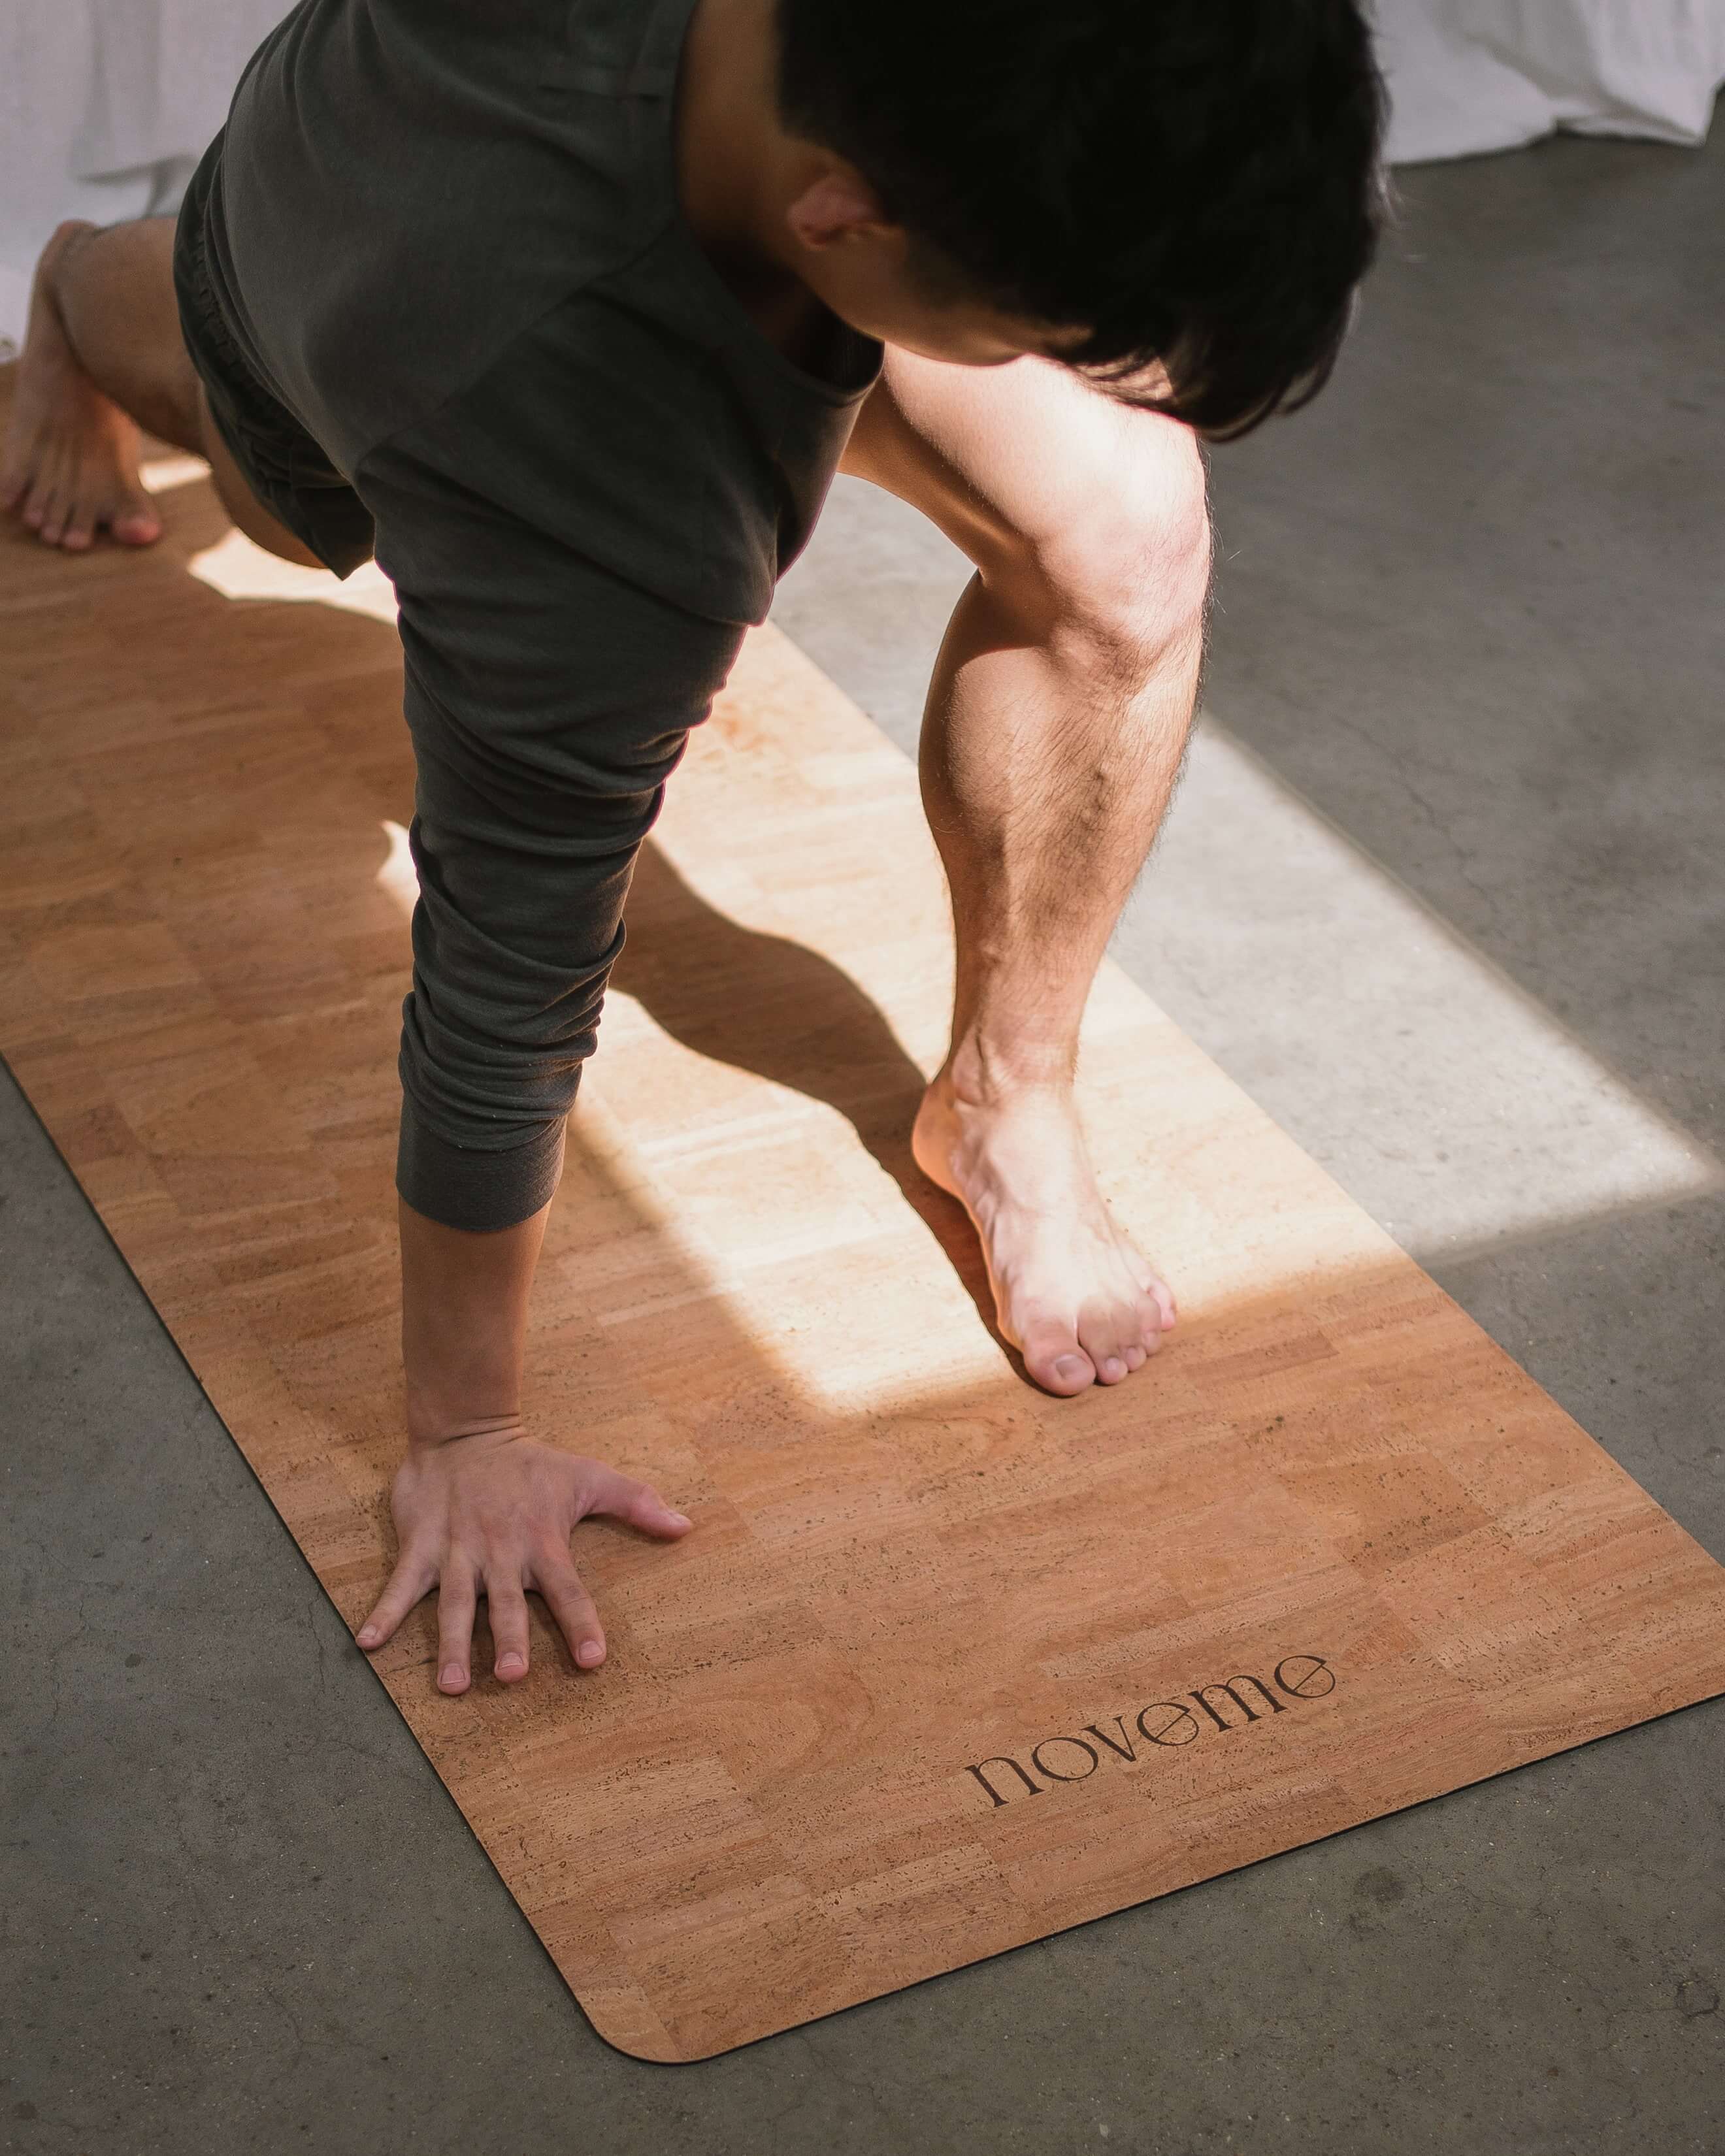 Best Yoga Poses for Men - YOGA PRACTICE